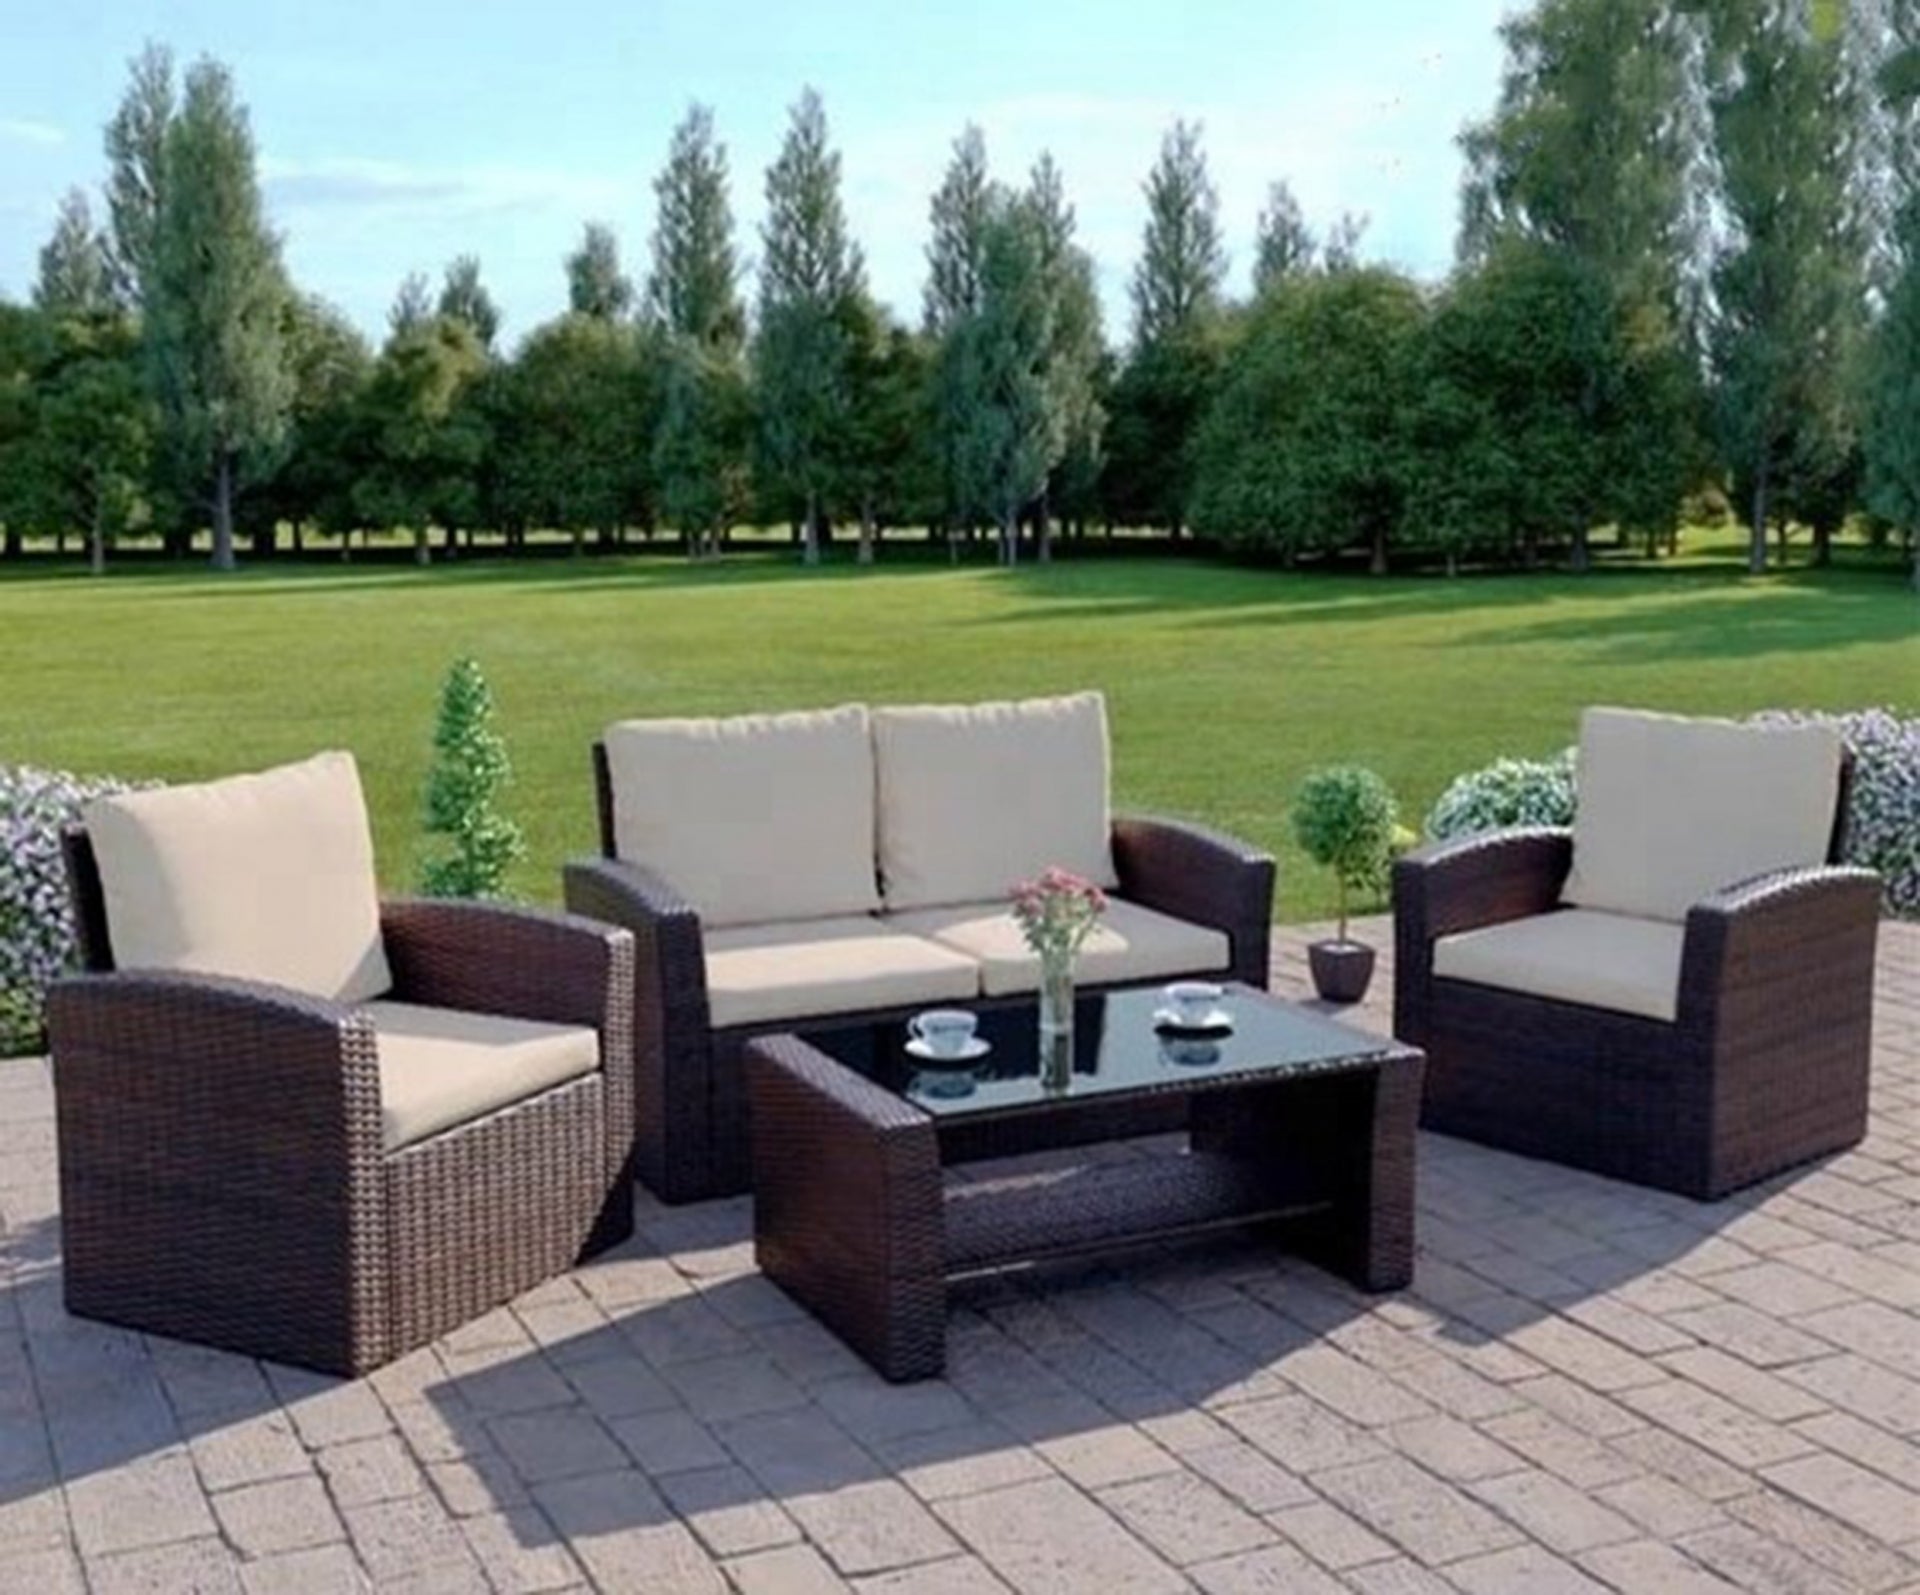 GF0003 - Rattan Outdoor Garden Furniture Sofa Set with Table - 4PCS